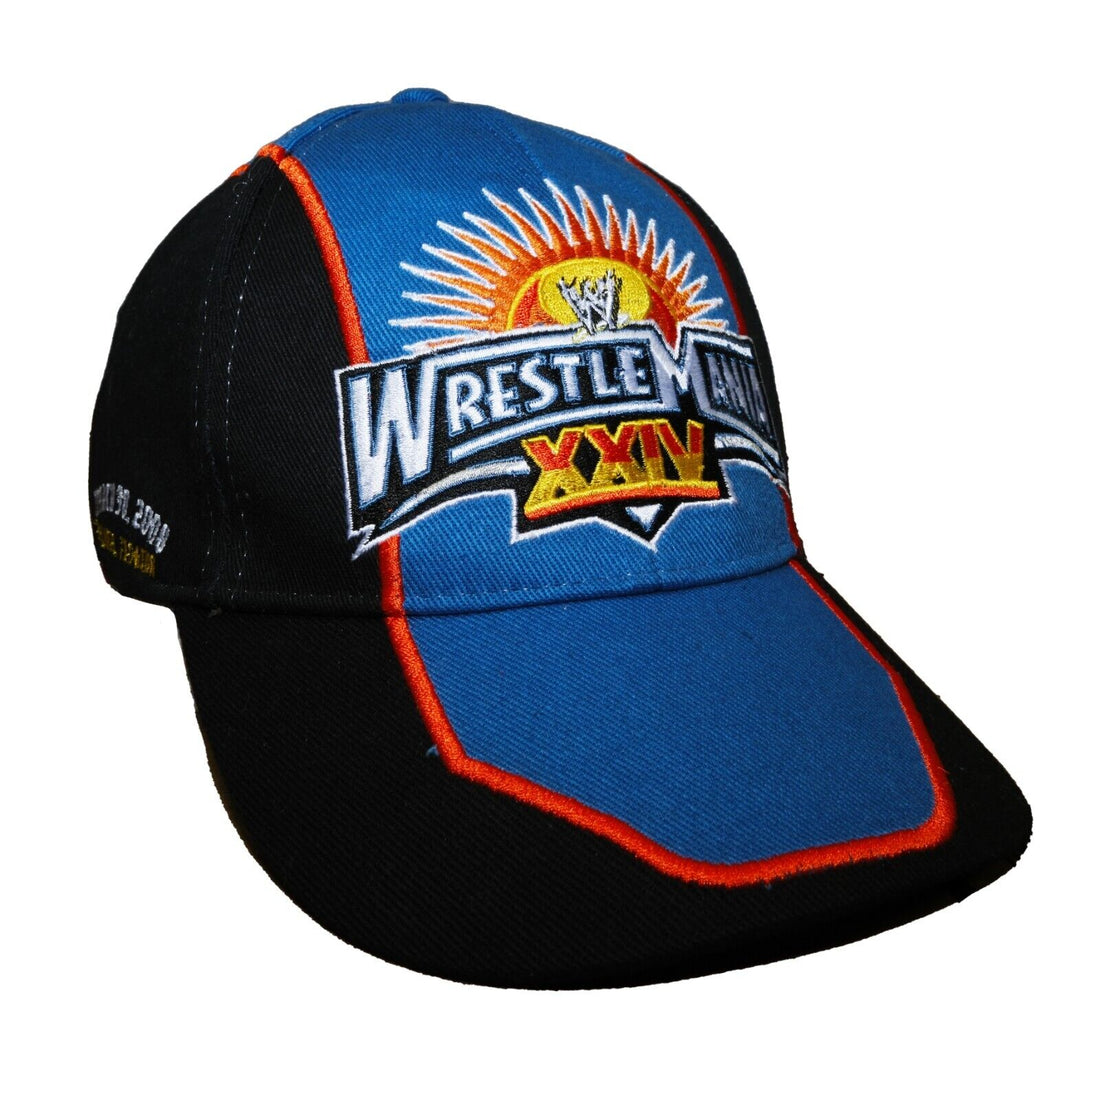 Wrestlemania XXIV Wrestling Strapback Hat Cap OSFA 2008 WWE